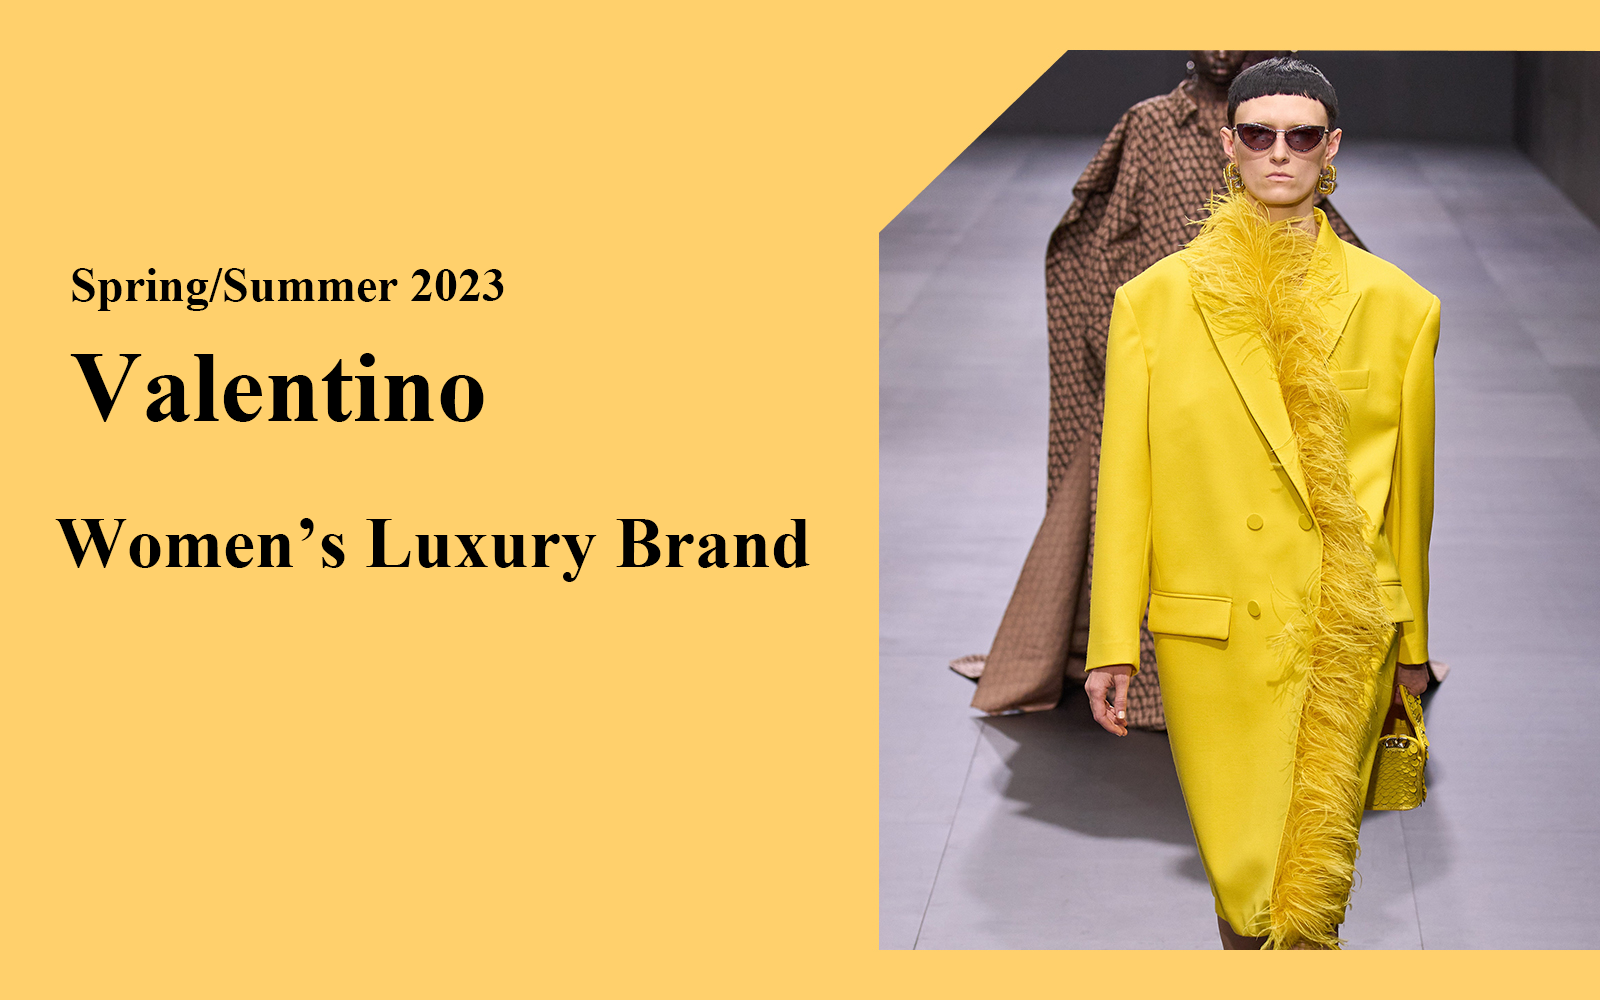 Elegant Fashion -- The Analysis of Valentino The Luxury Womenswear Brand